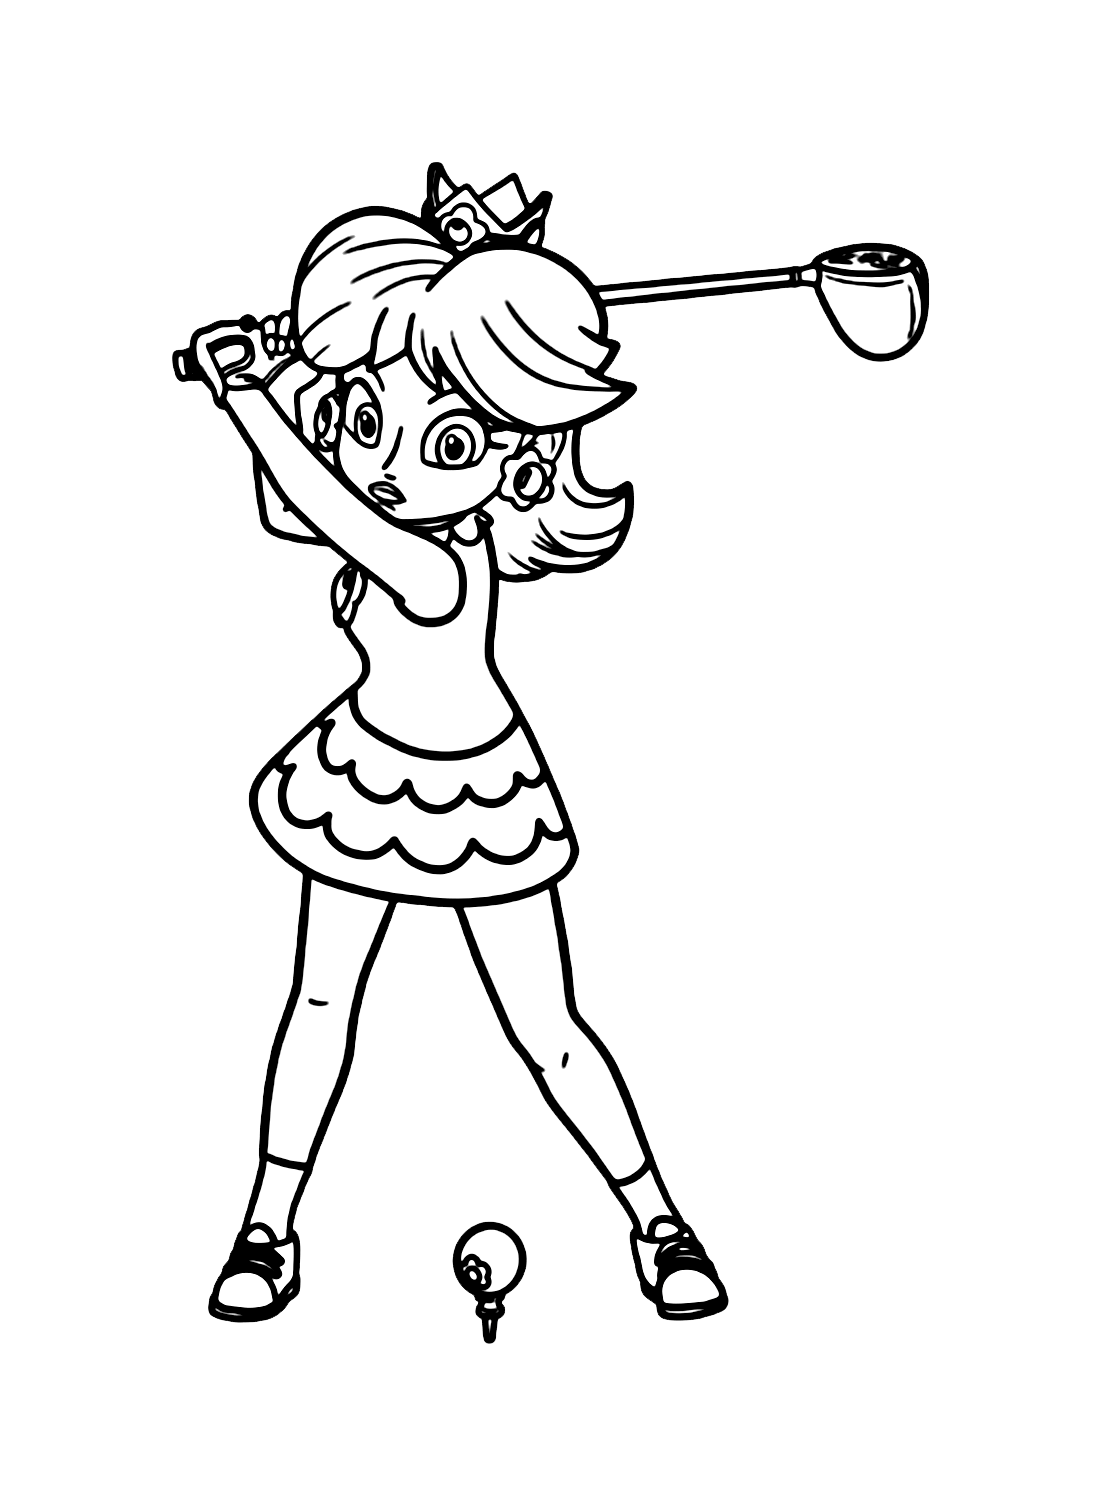 princess daisy golf